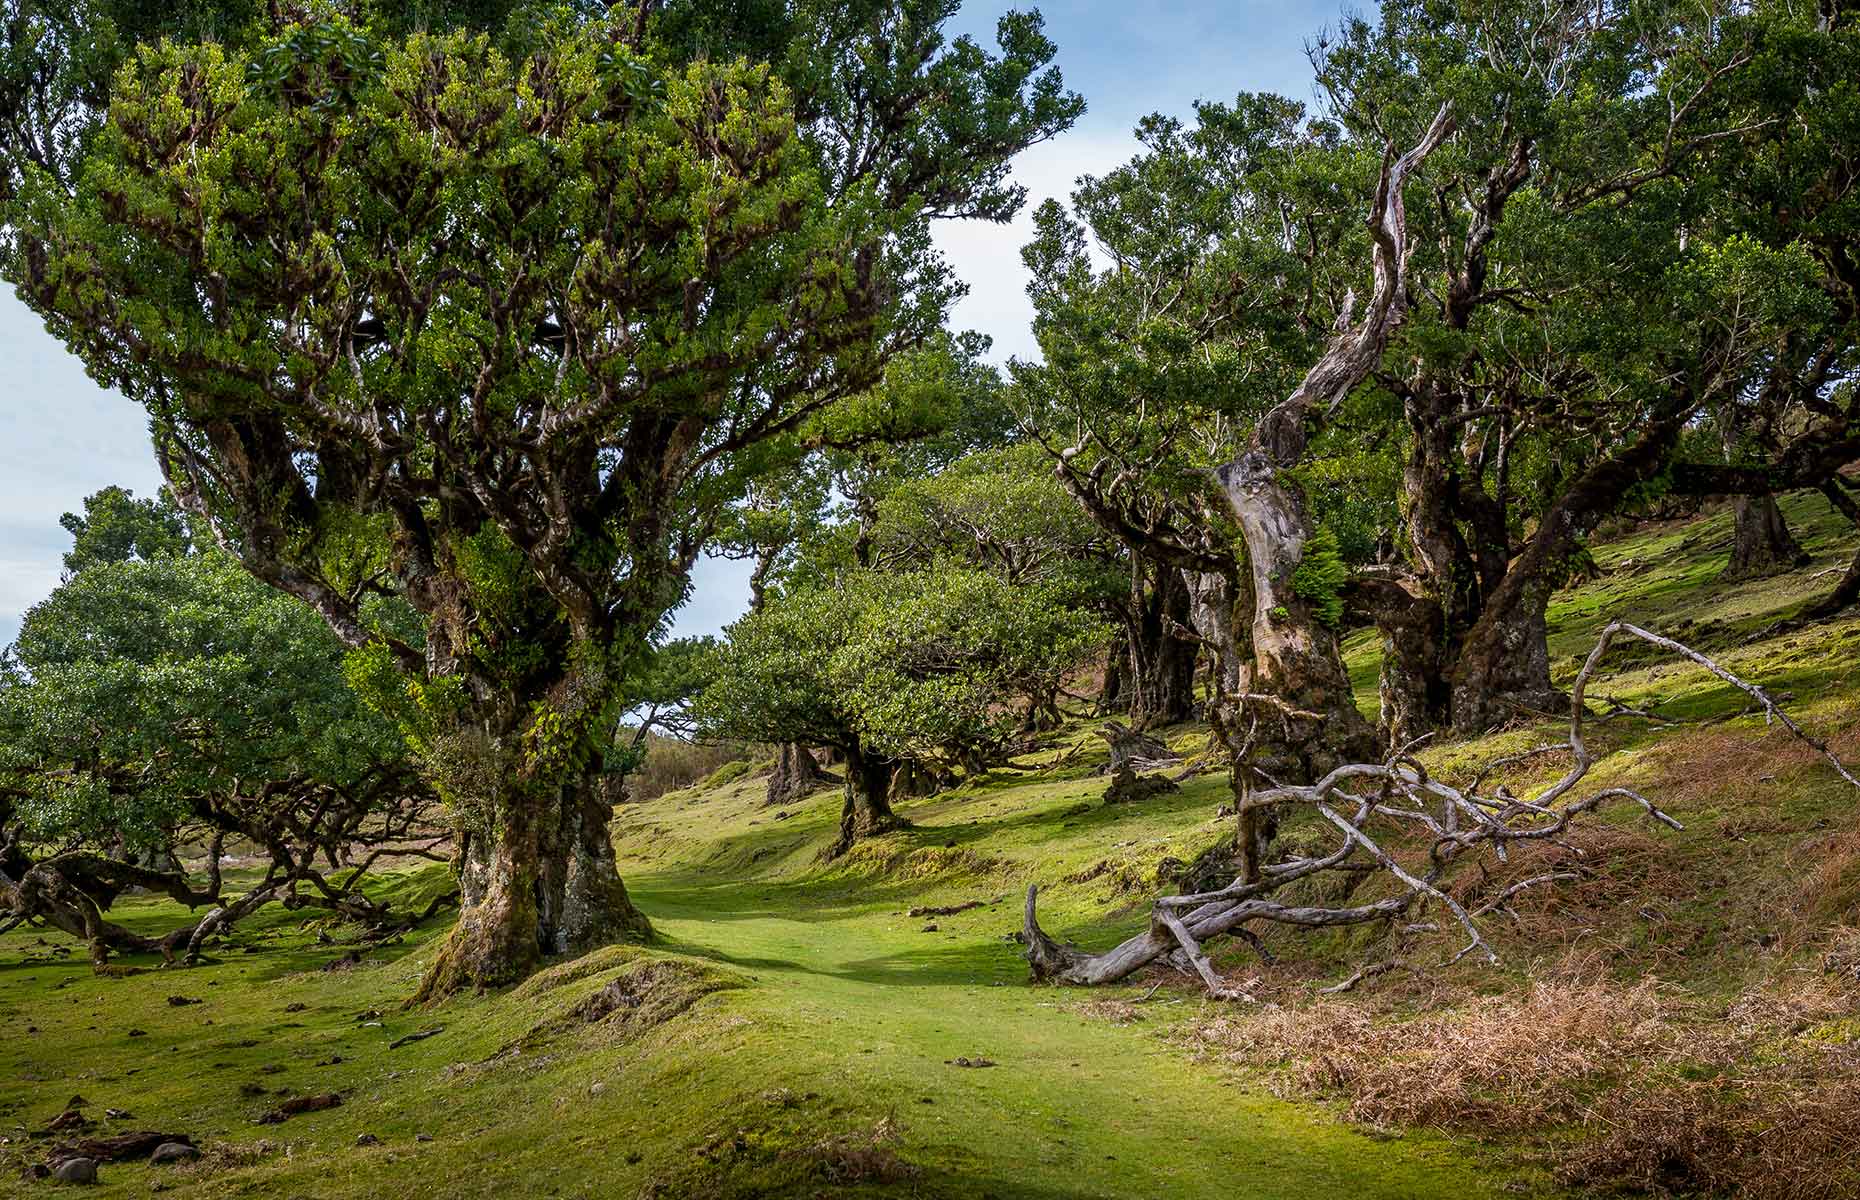 Fanal forest, Madeira (Image: Nikiforov Alexander/Shutterstock)